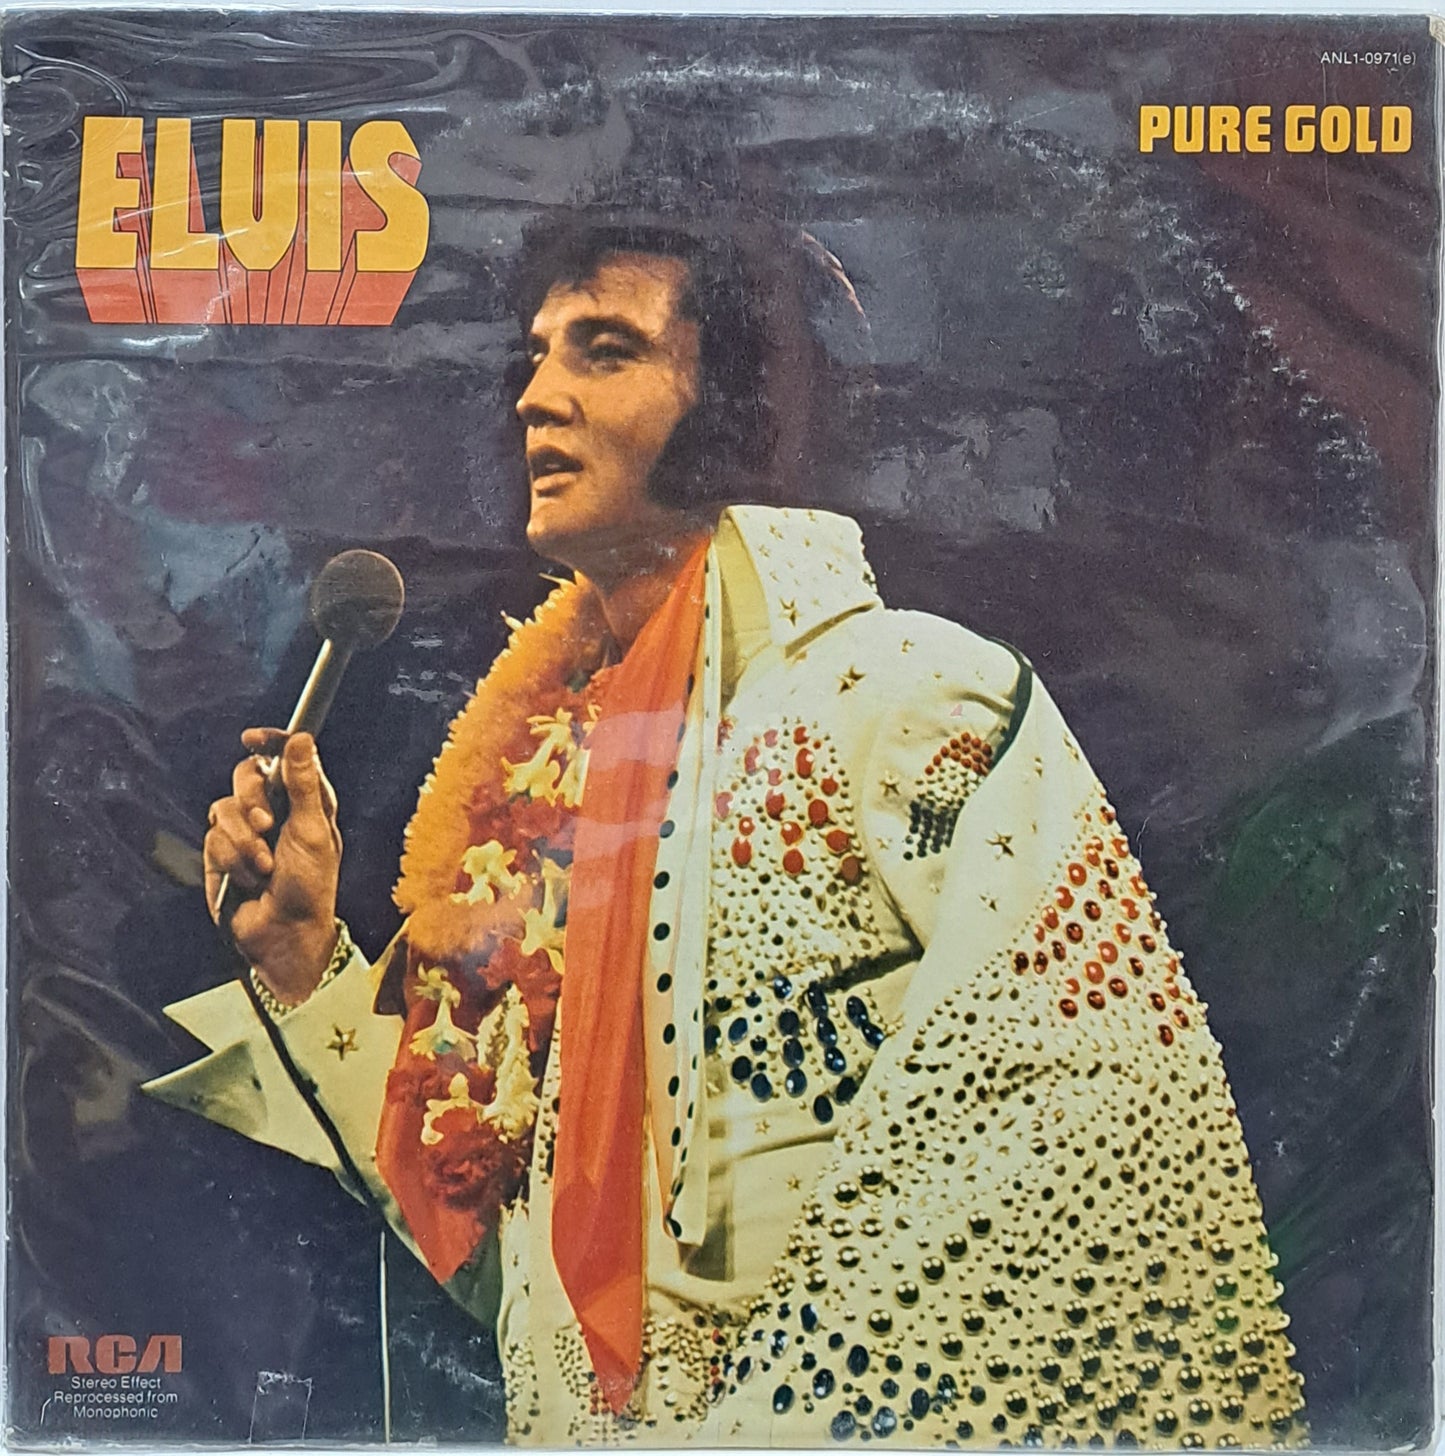 ELVIS PRESLEY - PURE GOLD LP